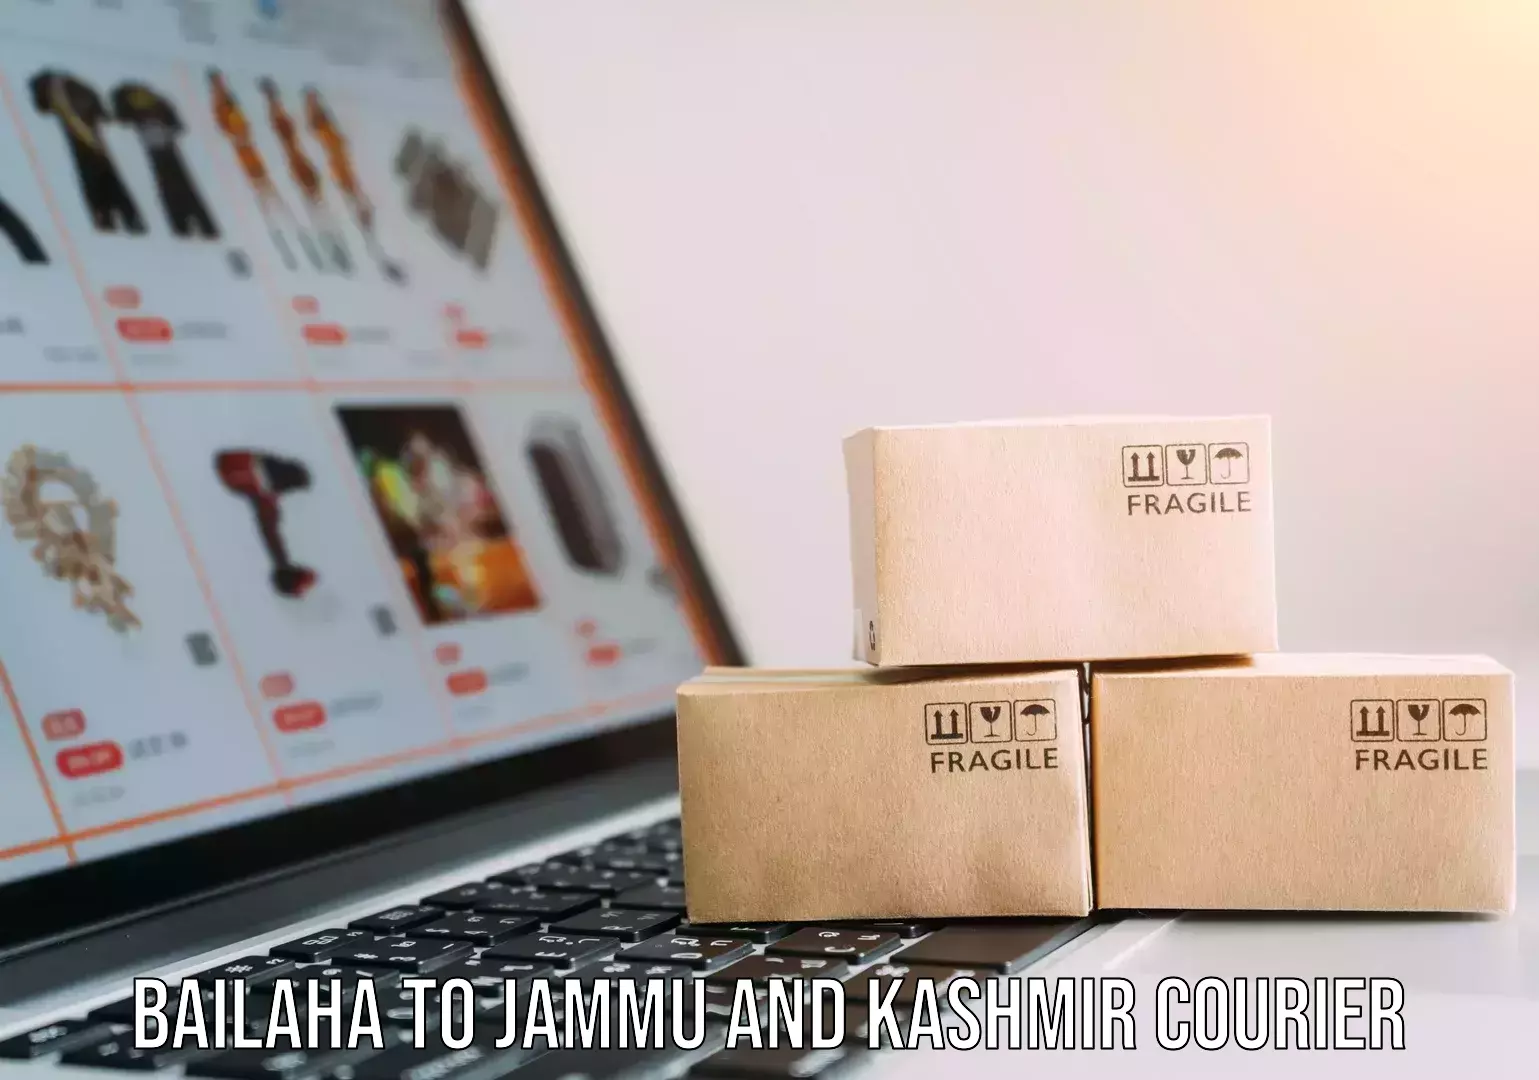 Advanced shipping network Bailaha to Jammu and Kashmir